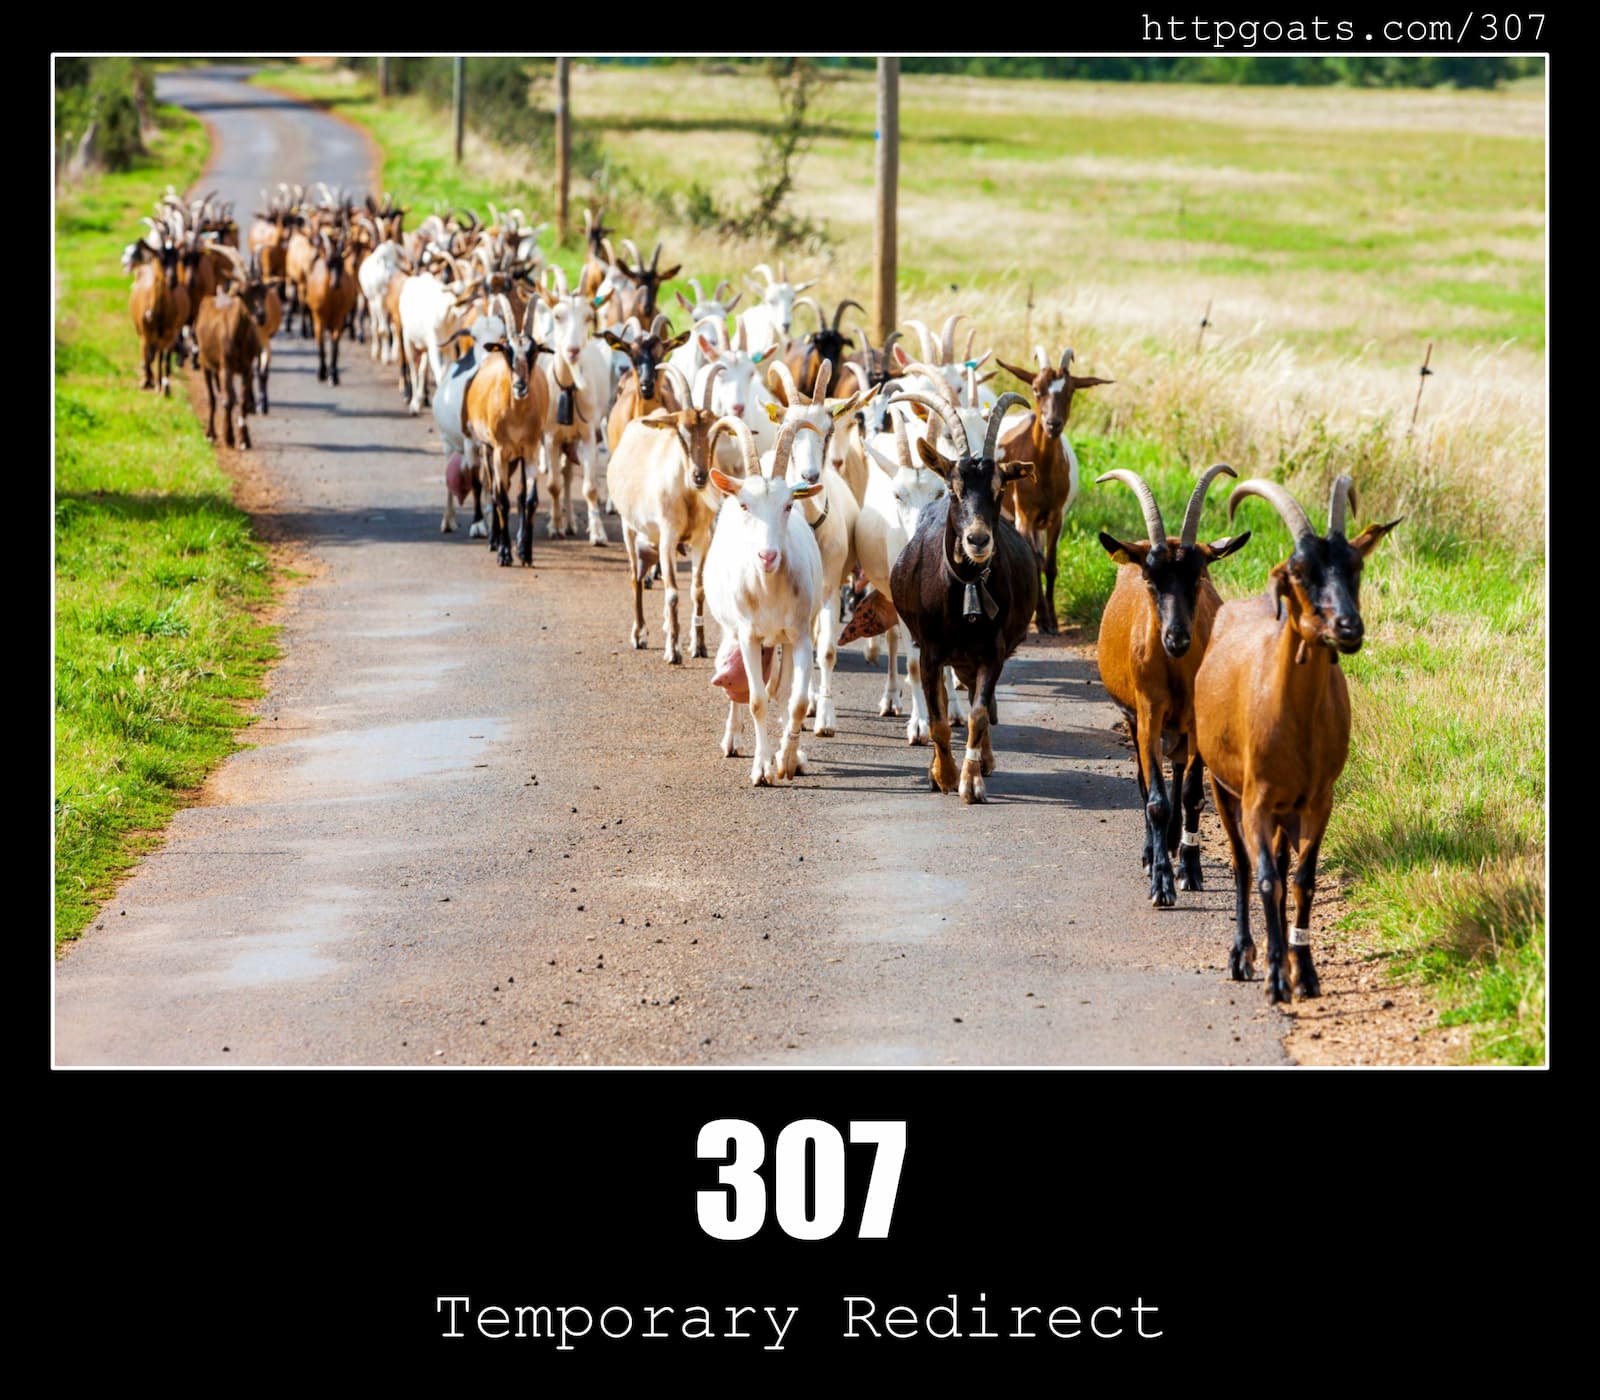 HTTP Status Code 307 Temporary Redirect & Goats